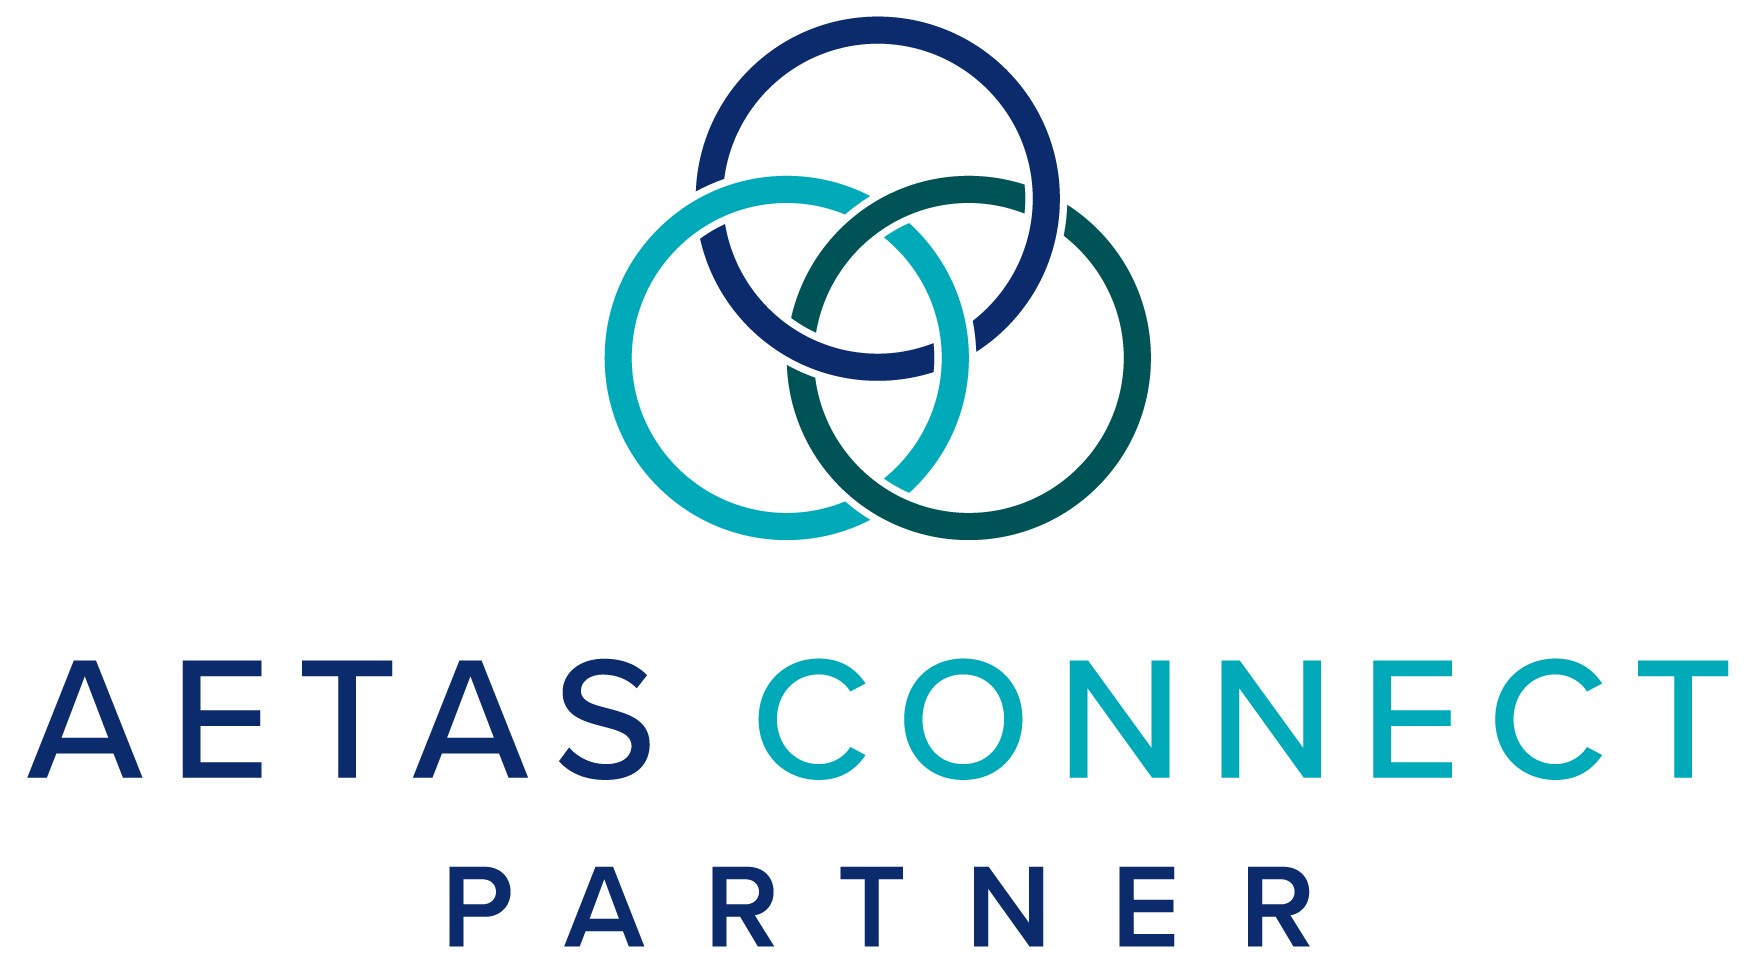 Aetas Connect Partner badge